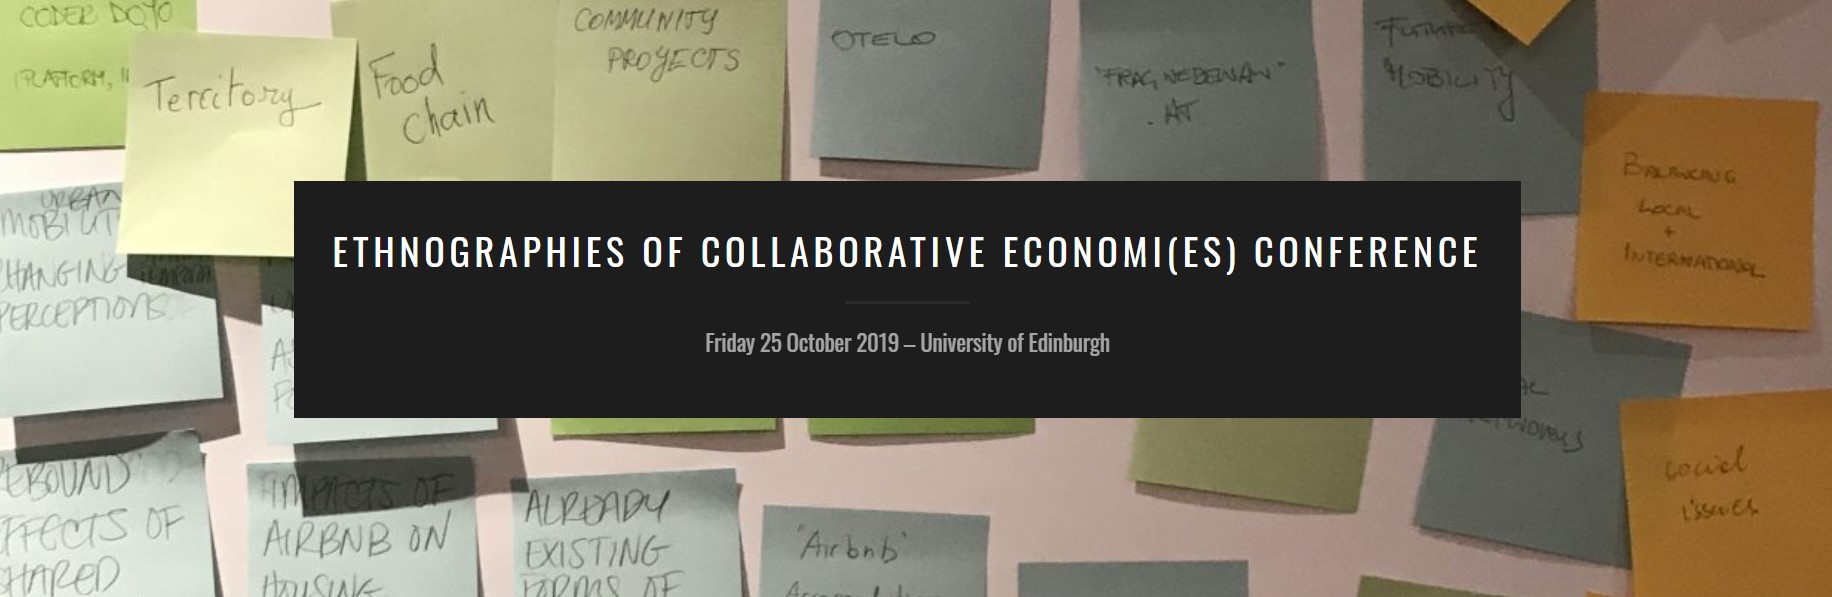 ethnographies of collaborative economies conference